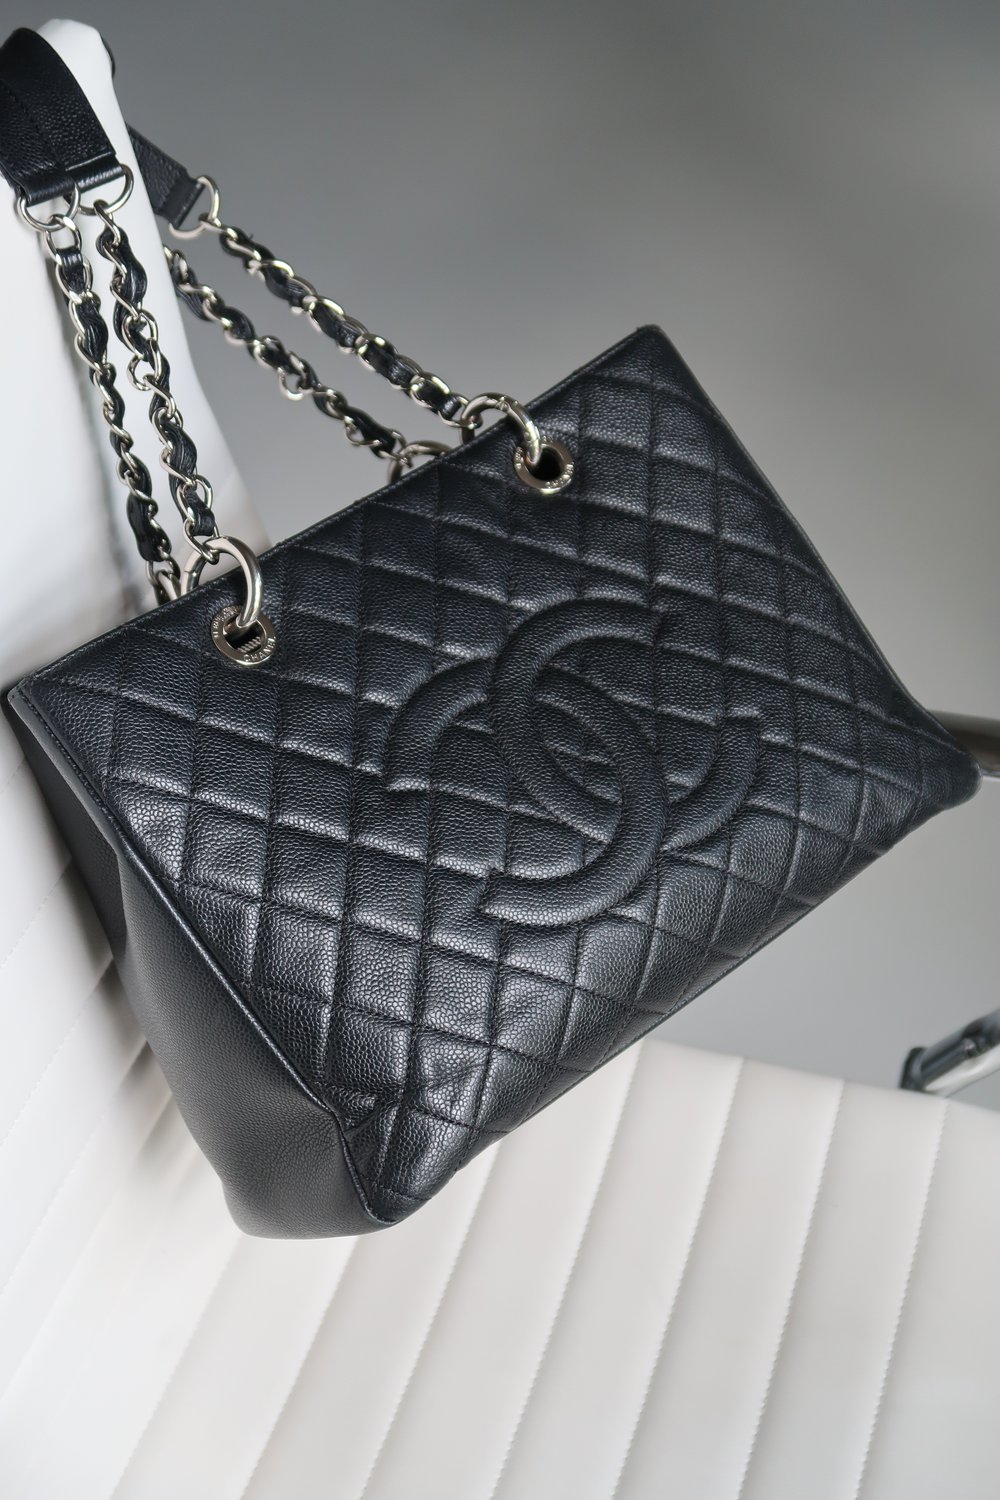 Chanel Shopping Tote Bag 400854